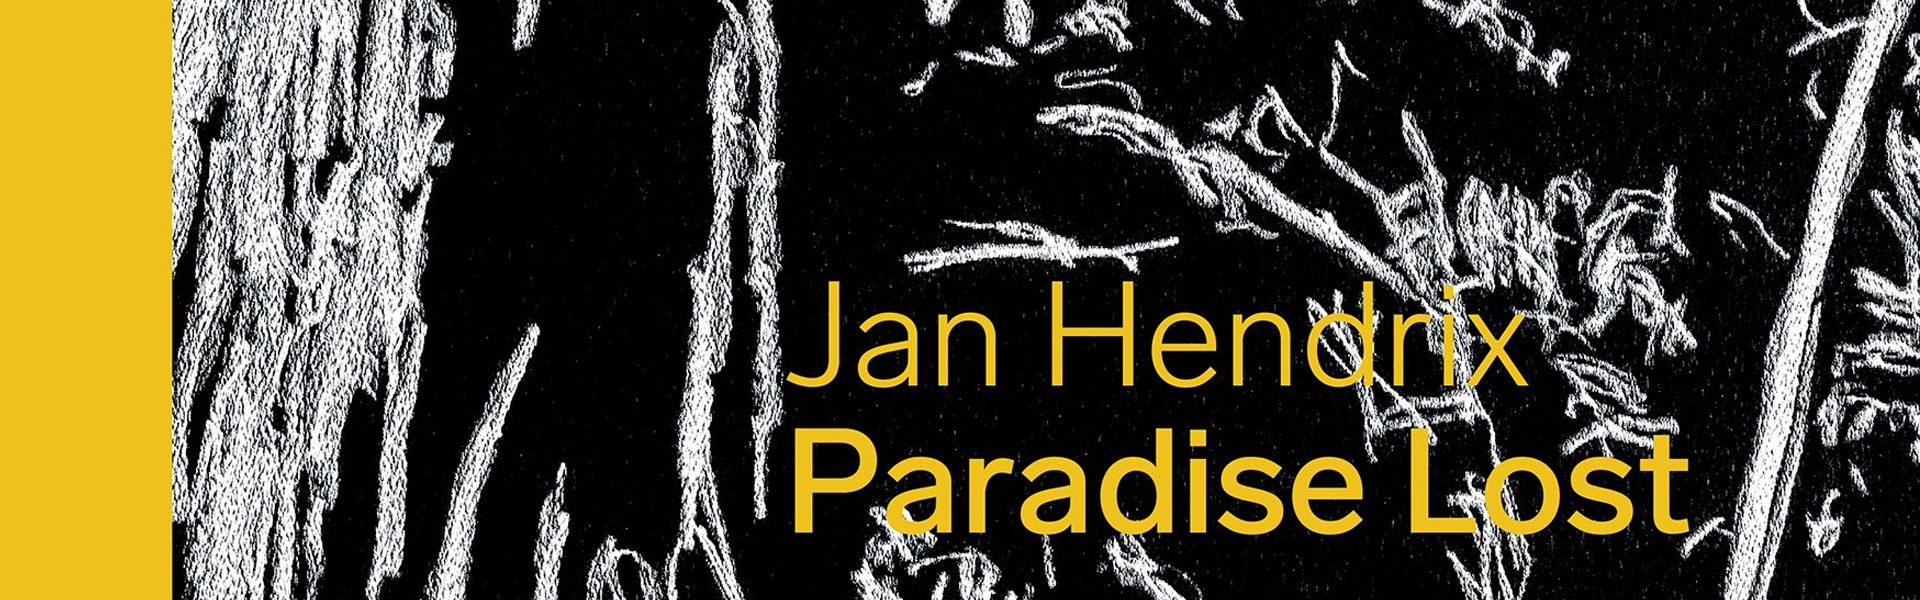 Jan Hendrix: Paradise Lost